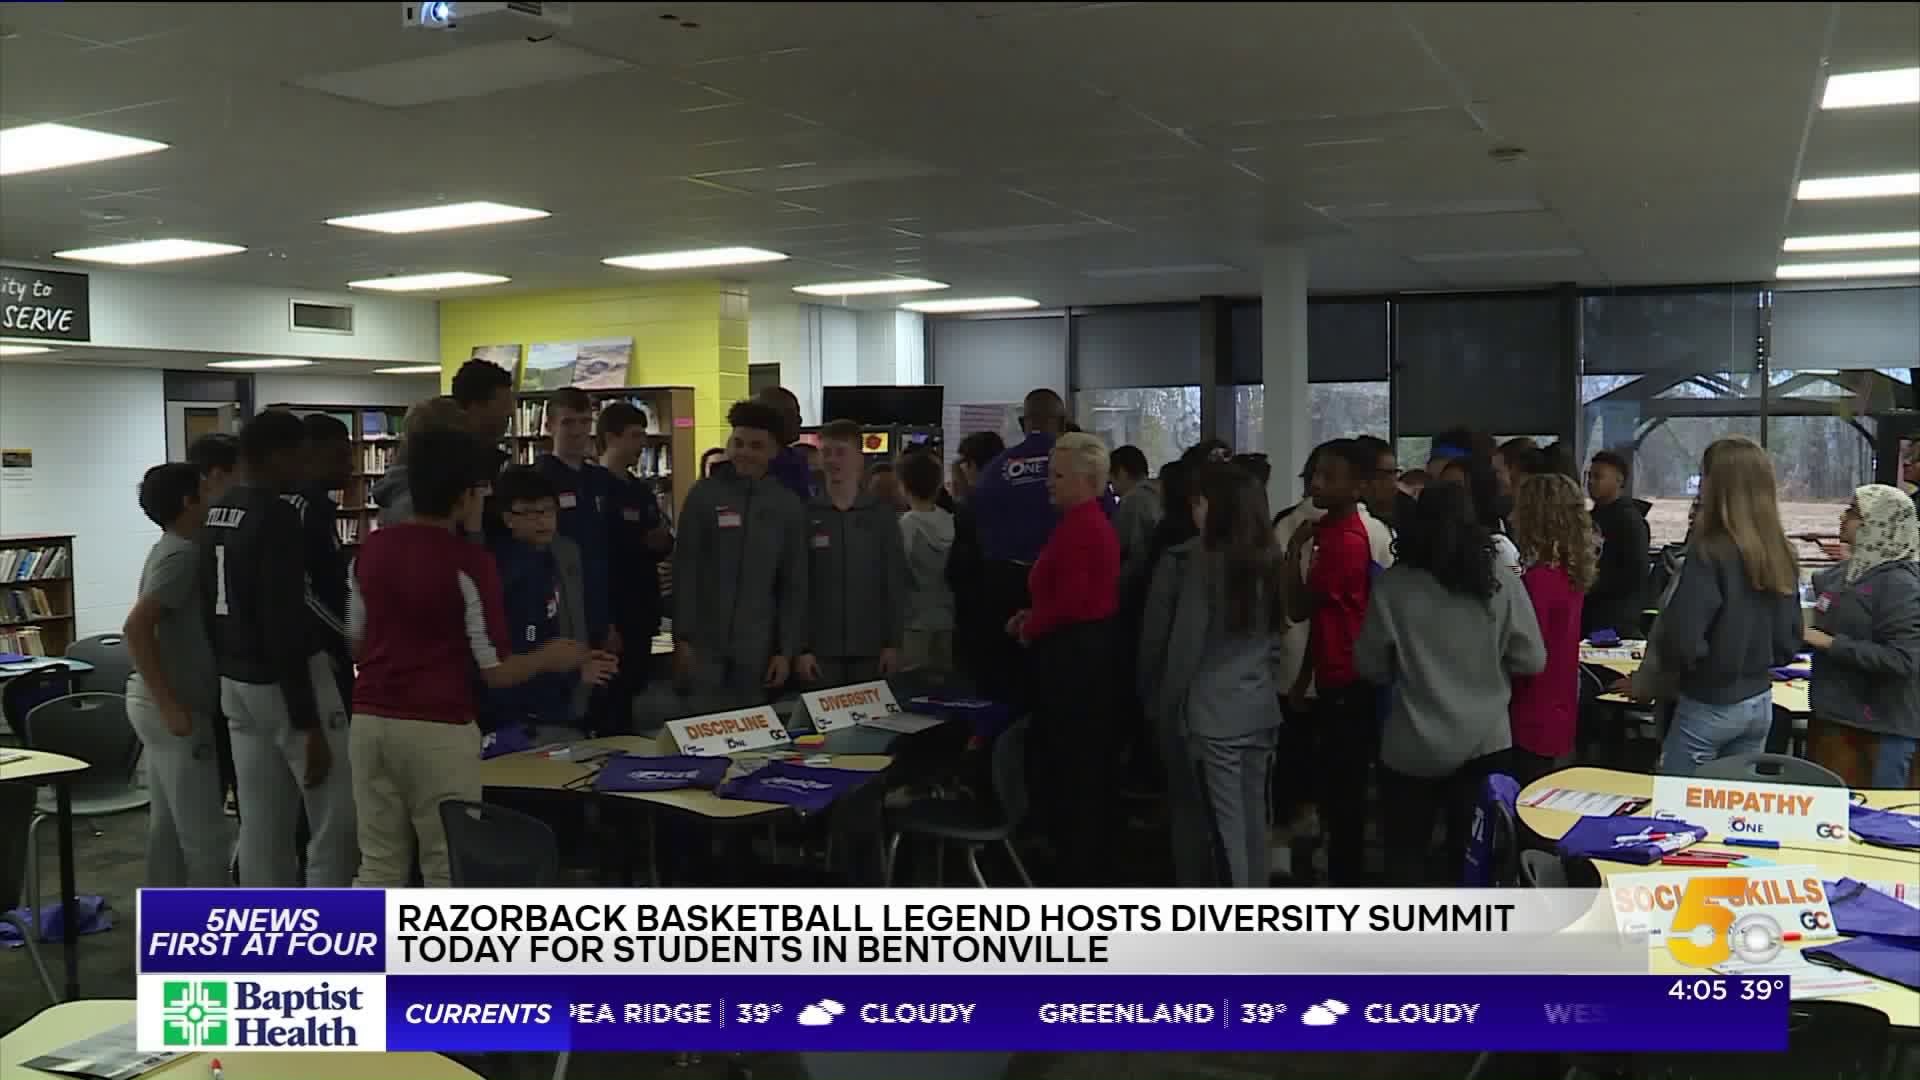 Former Razorback And NBA Player Holds Diversity Summit At Bentonville Junior High